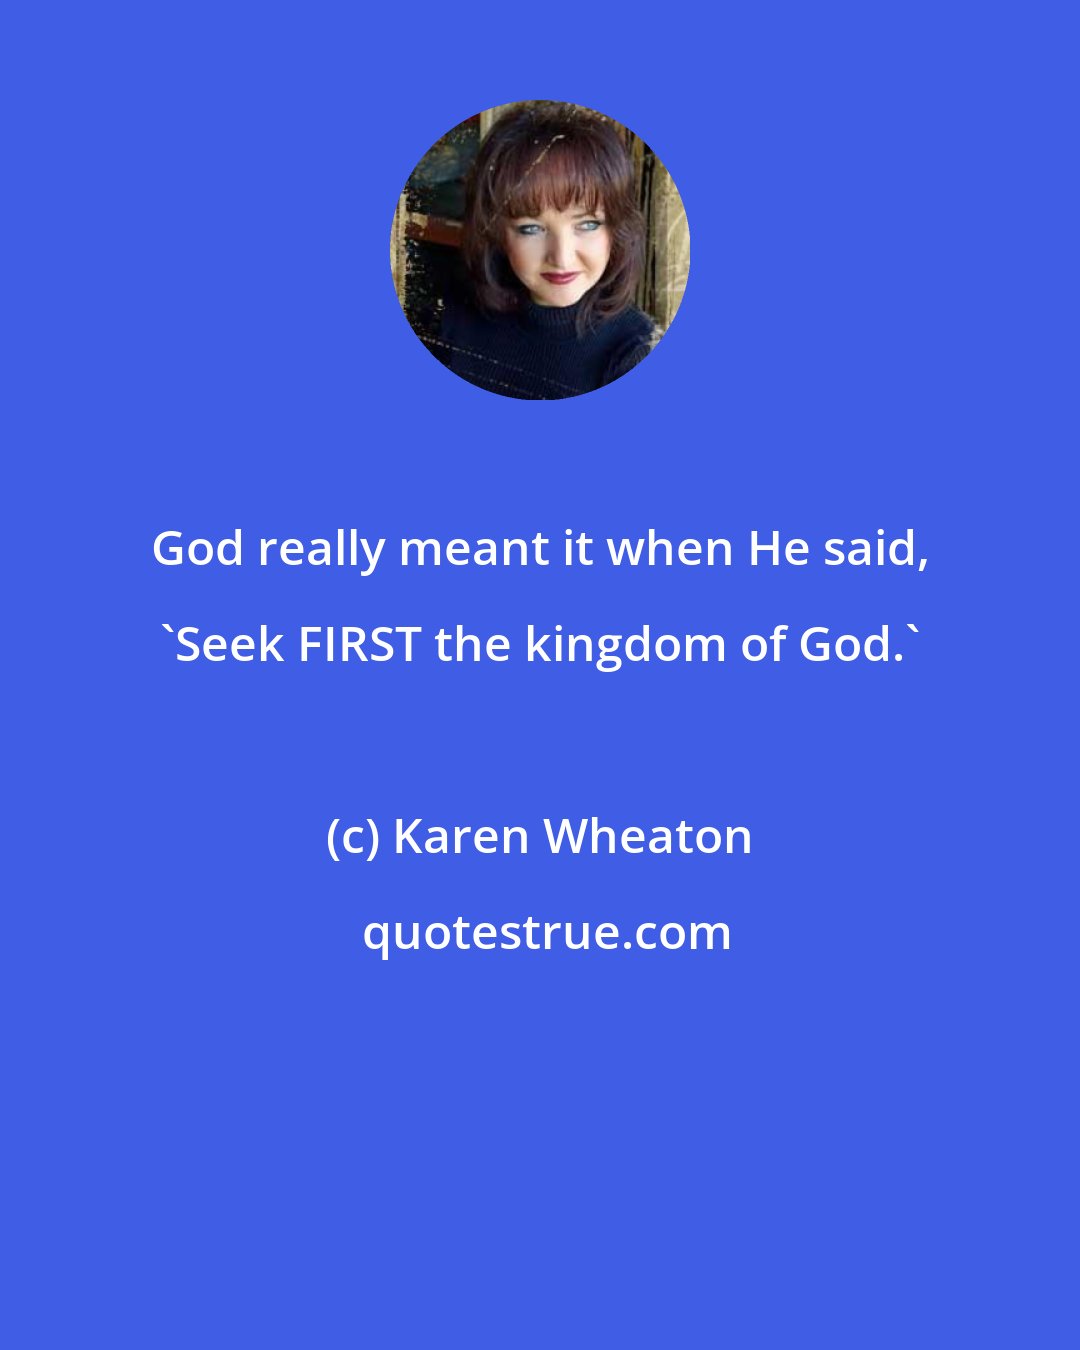 Karen Wheaton: God really meant it when He said, 'Seek FIRST the kingdom of God.'